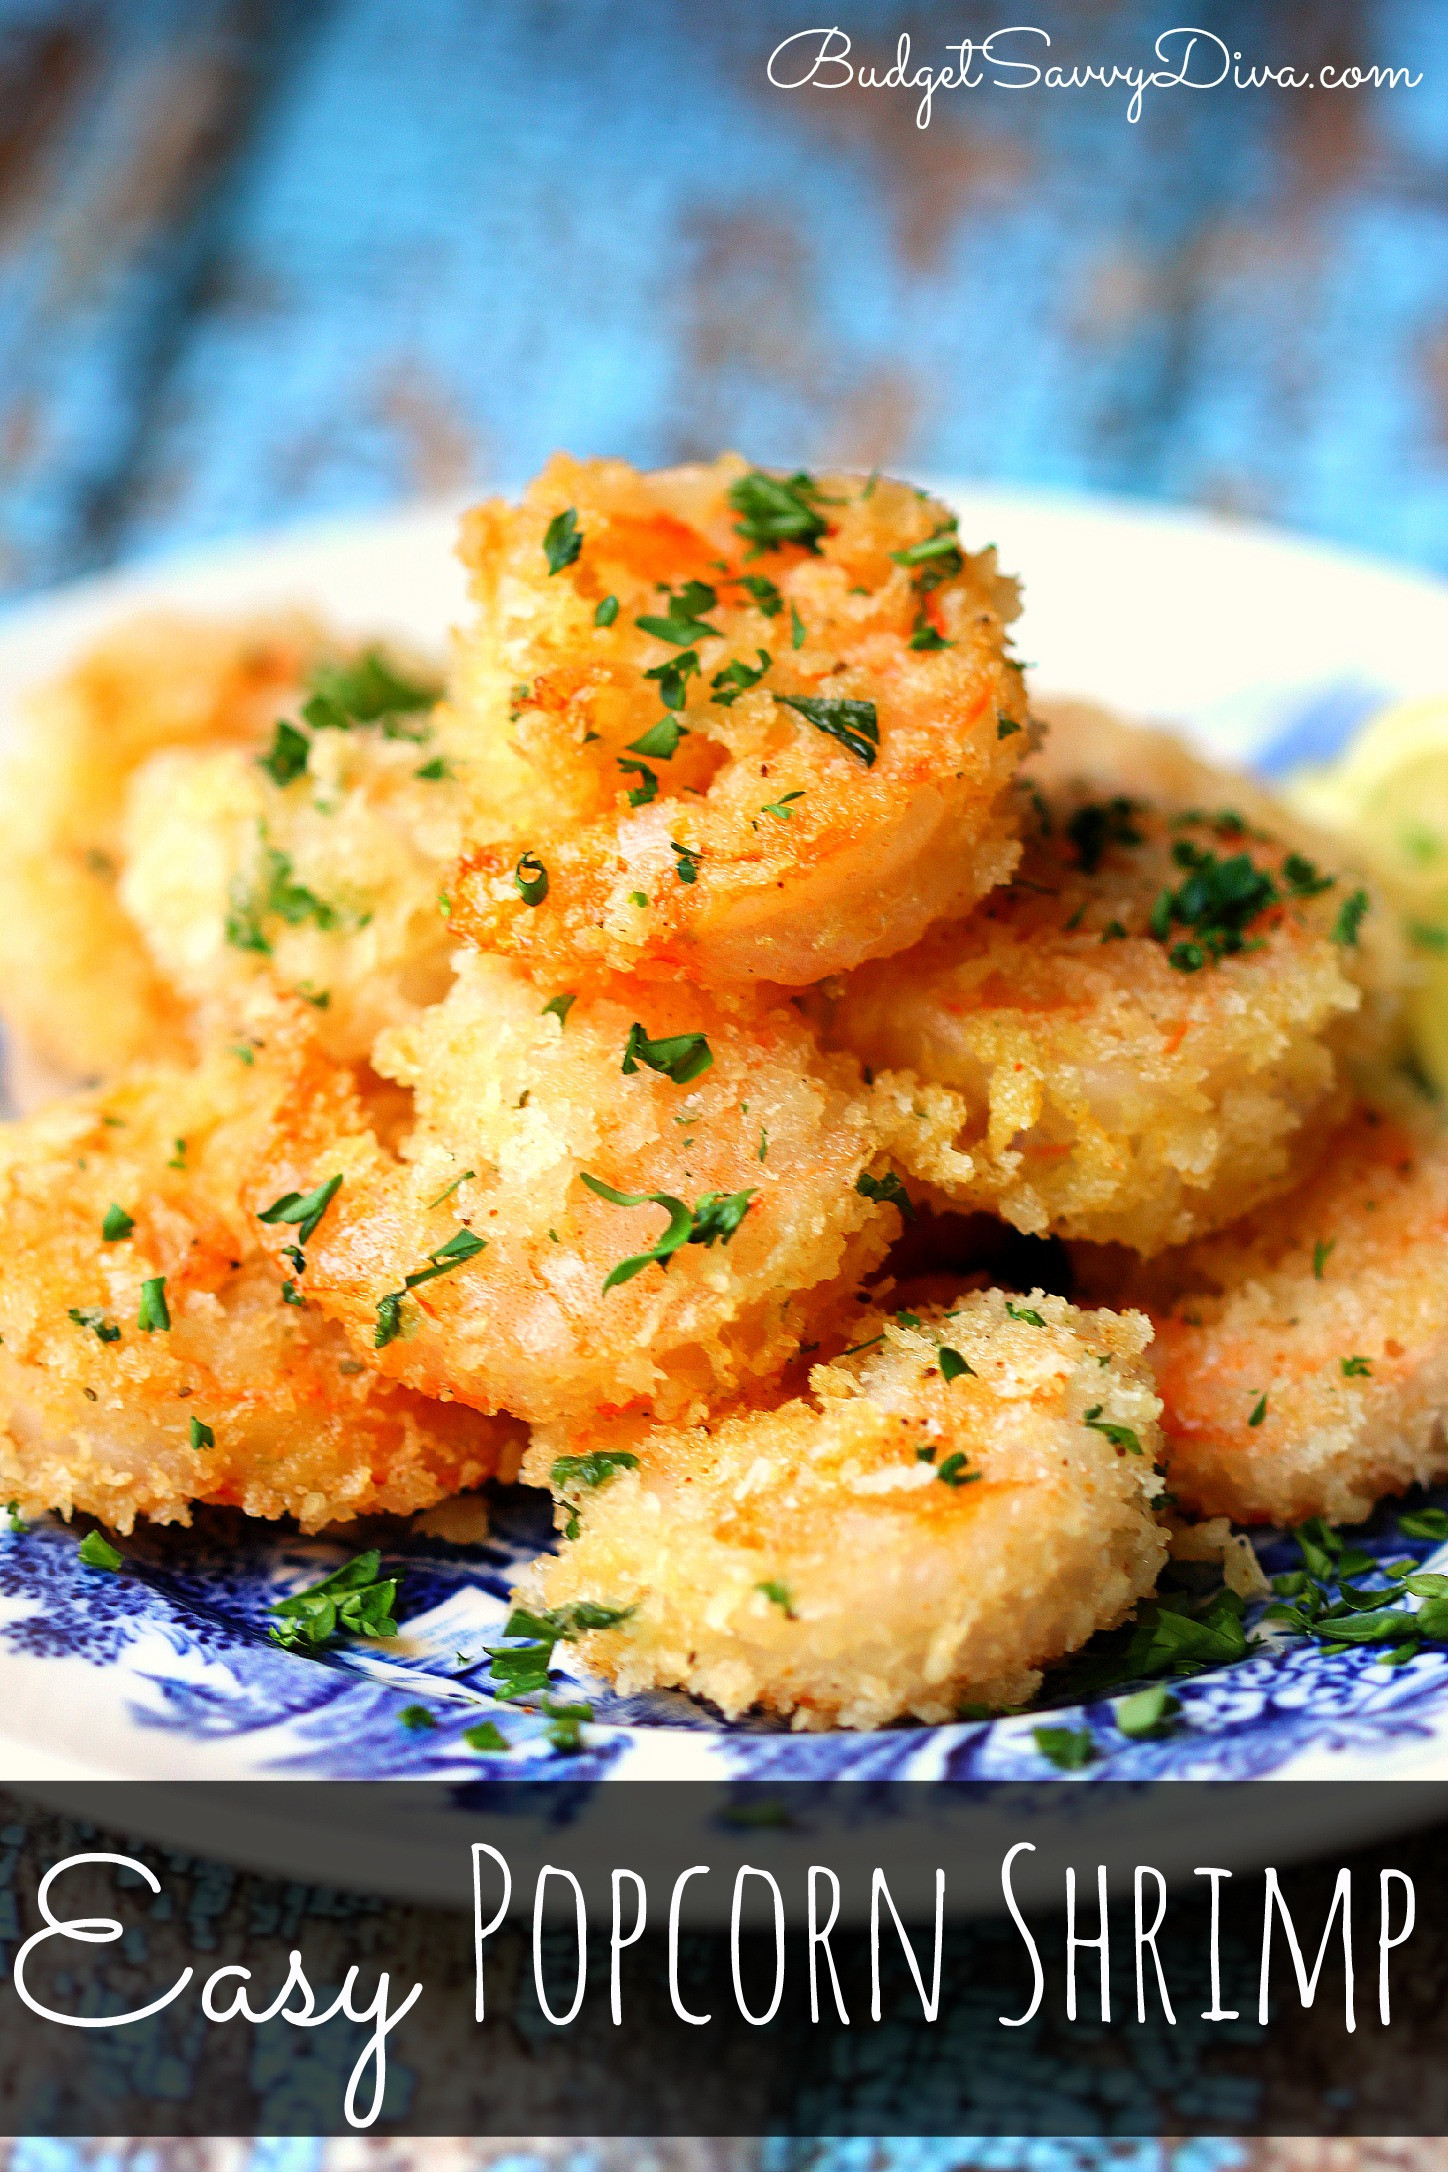 Shrimp Recipes For Kids
 Top 10 Healthy Kid Friendly Recipe Roundup Bud Savvy Diva